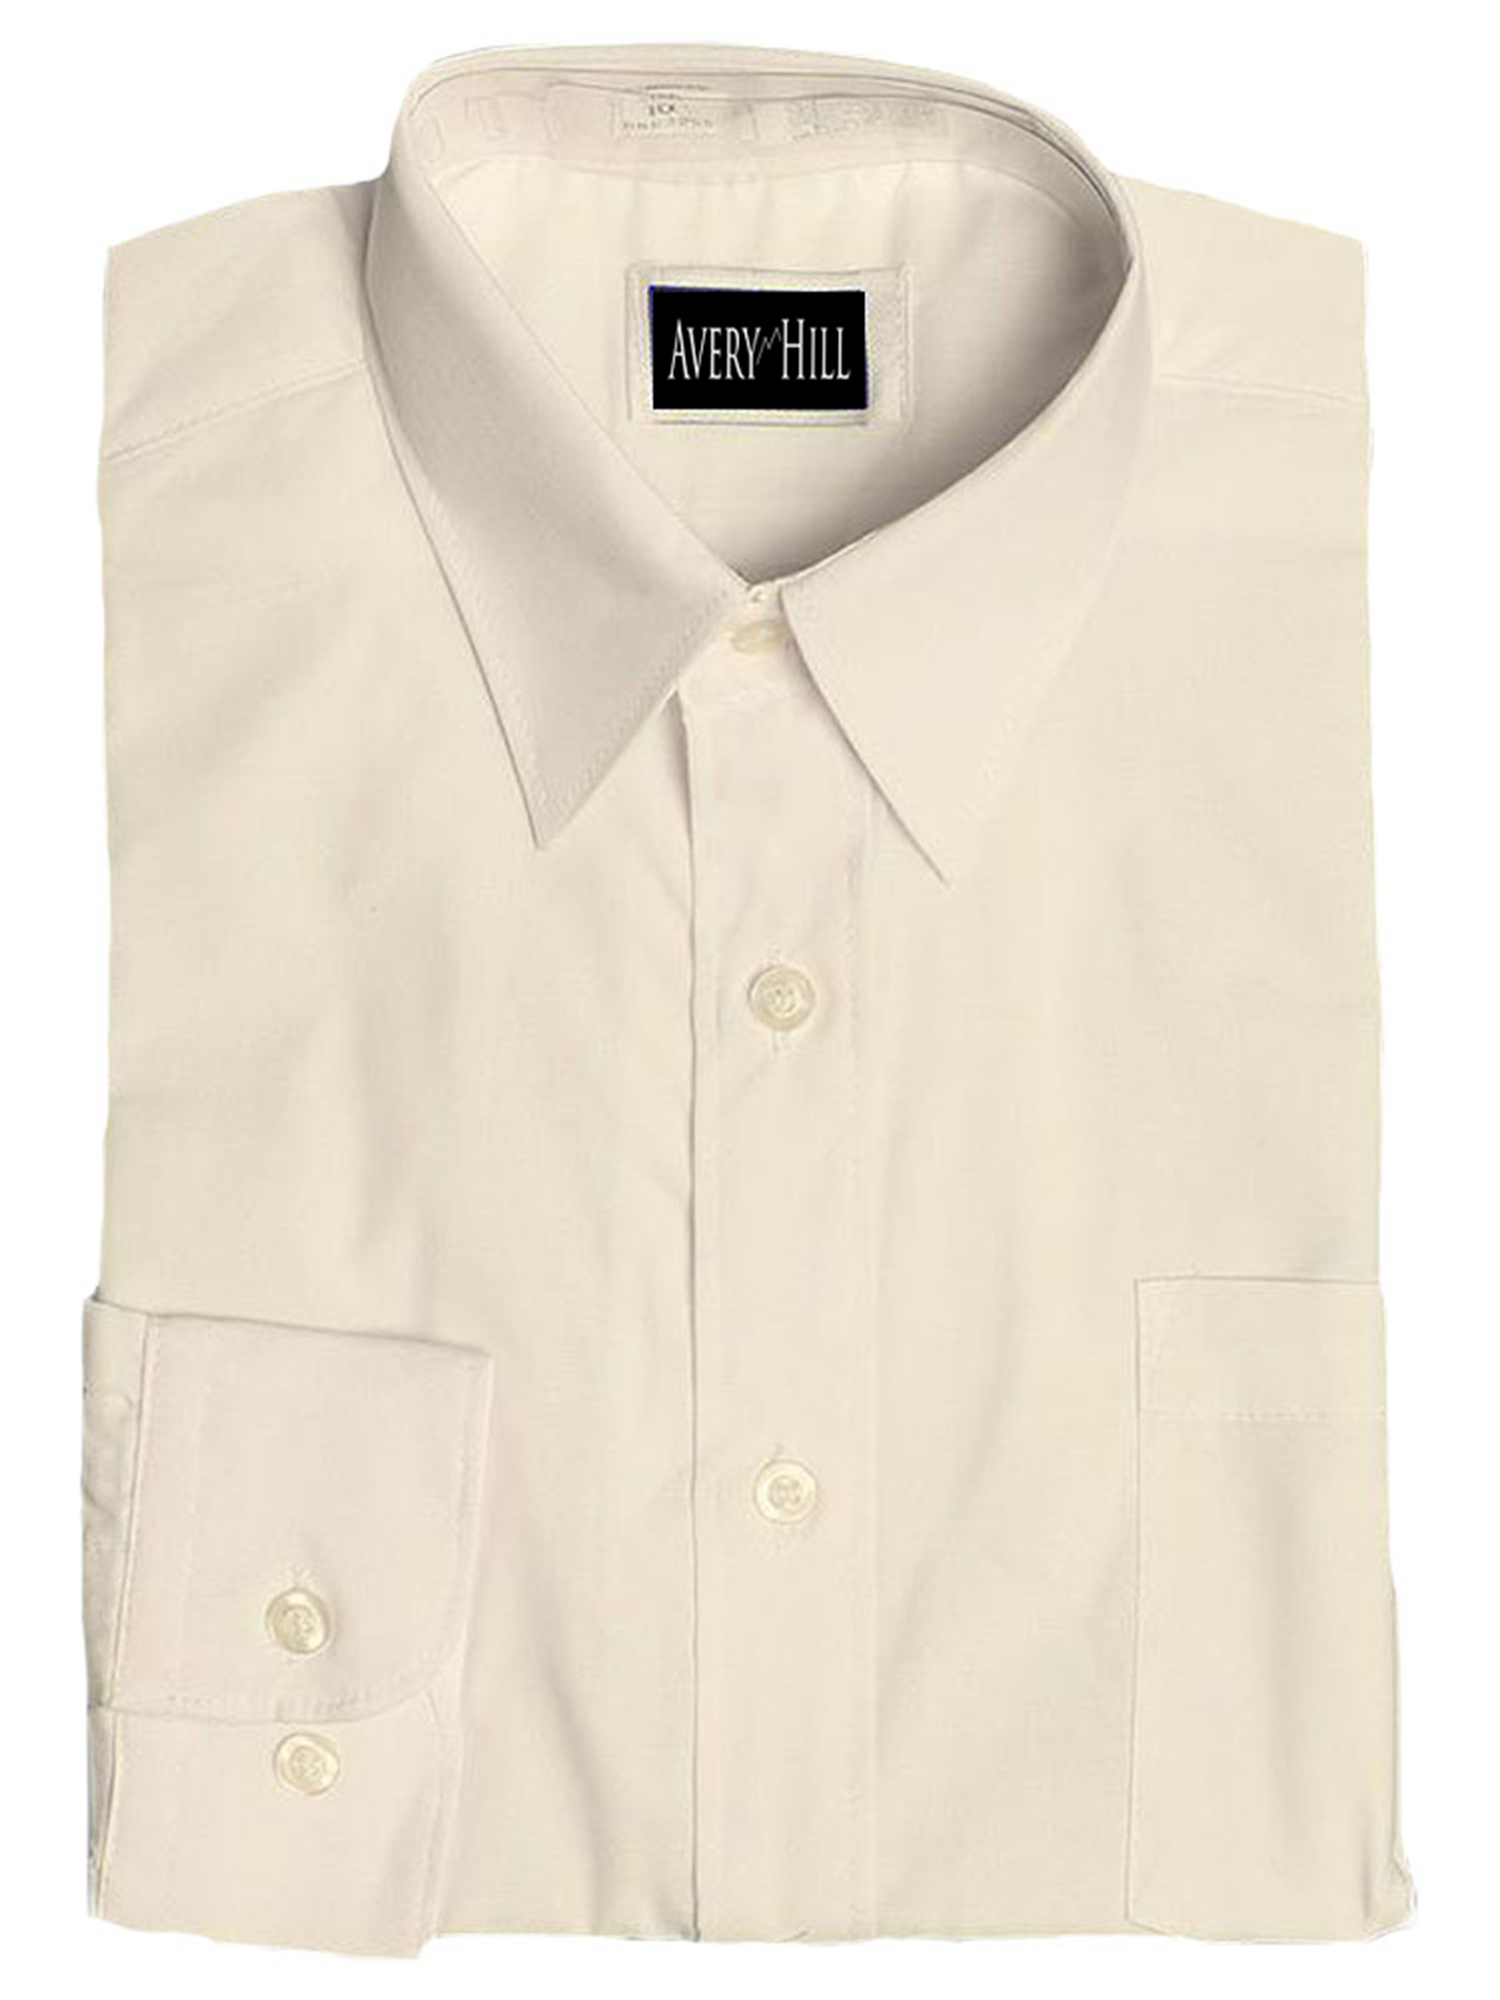 Boys White or Ivory Long Sleeve Wrinkle Resistant Dress Shirt IV 14X